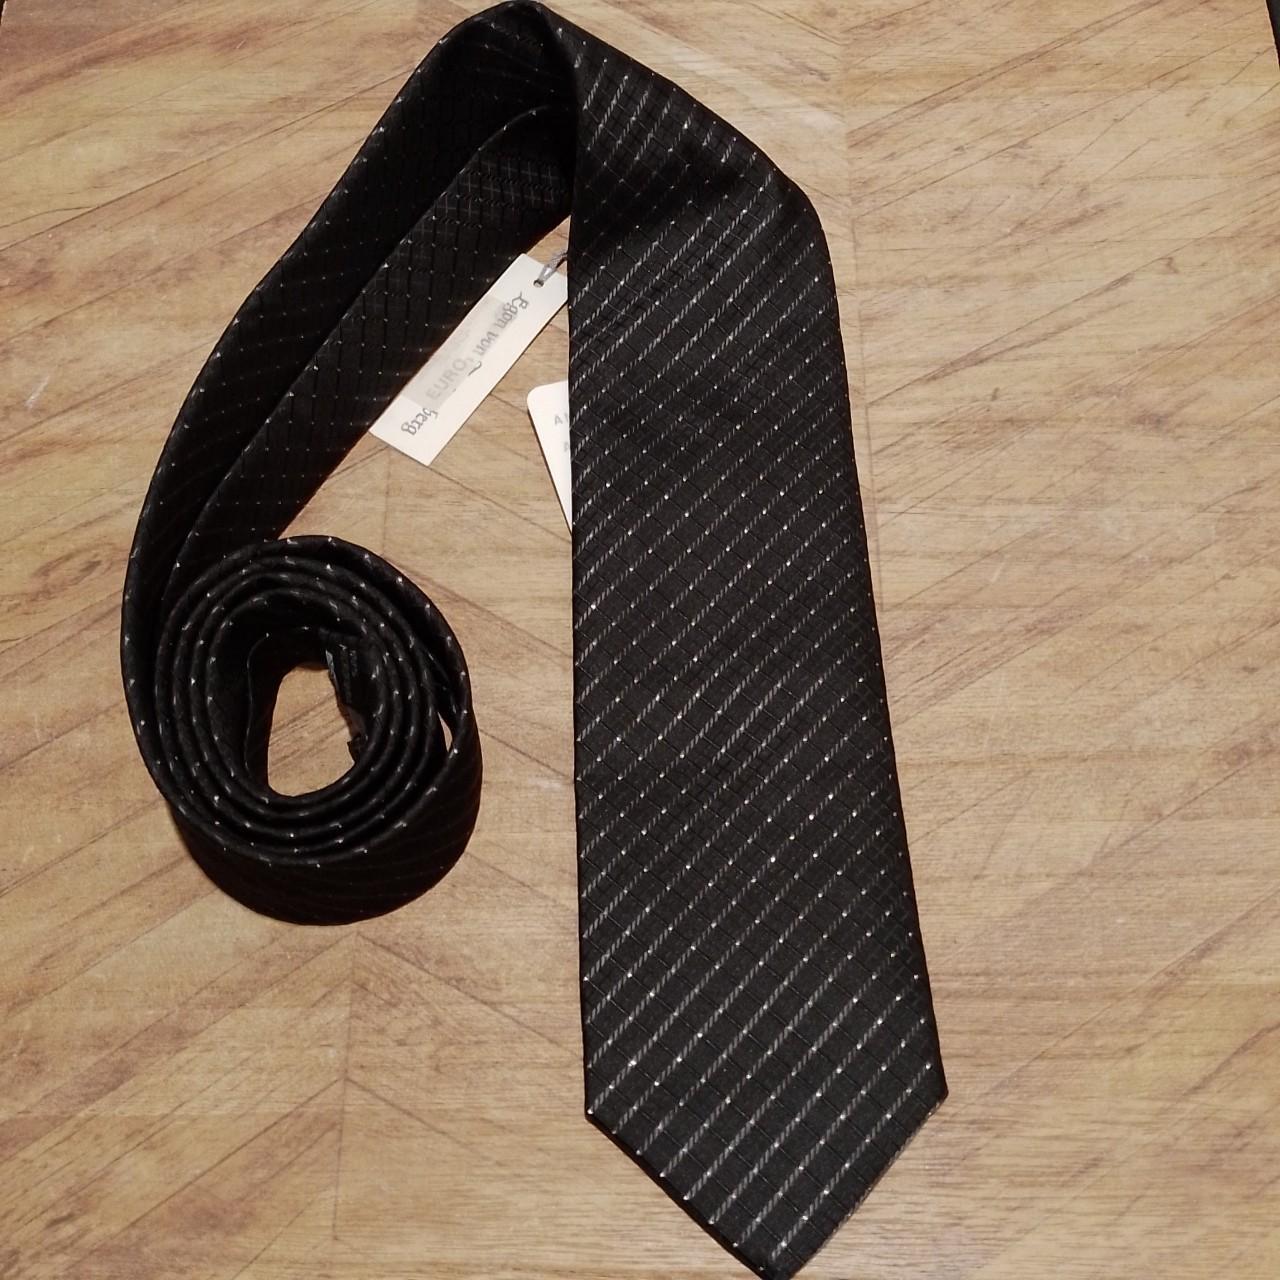 Cravatta Egon Von Furstenberg, colore nero con... - Depop